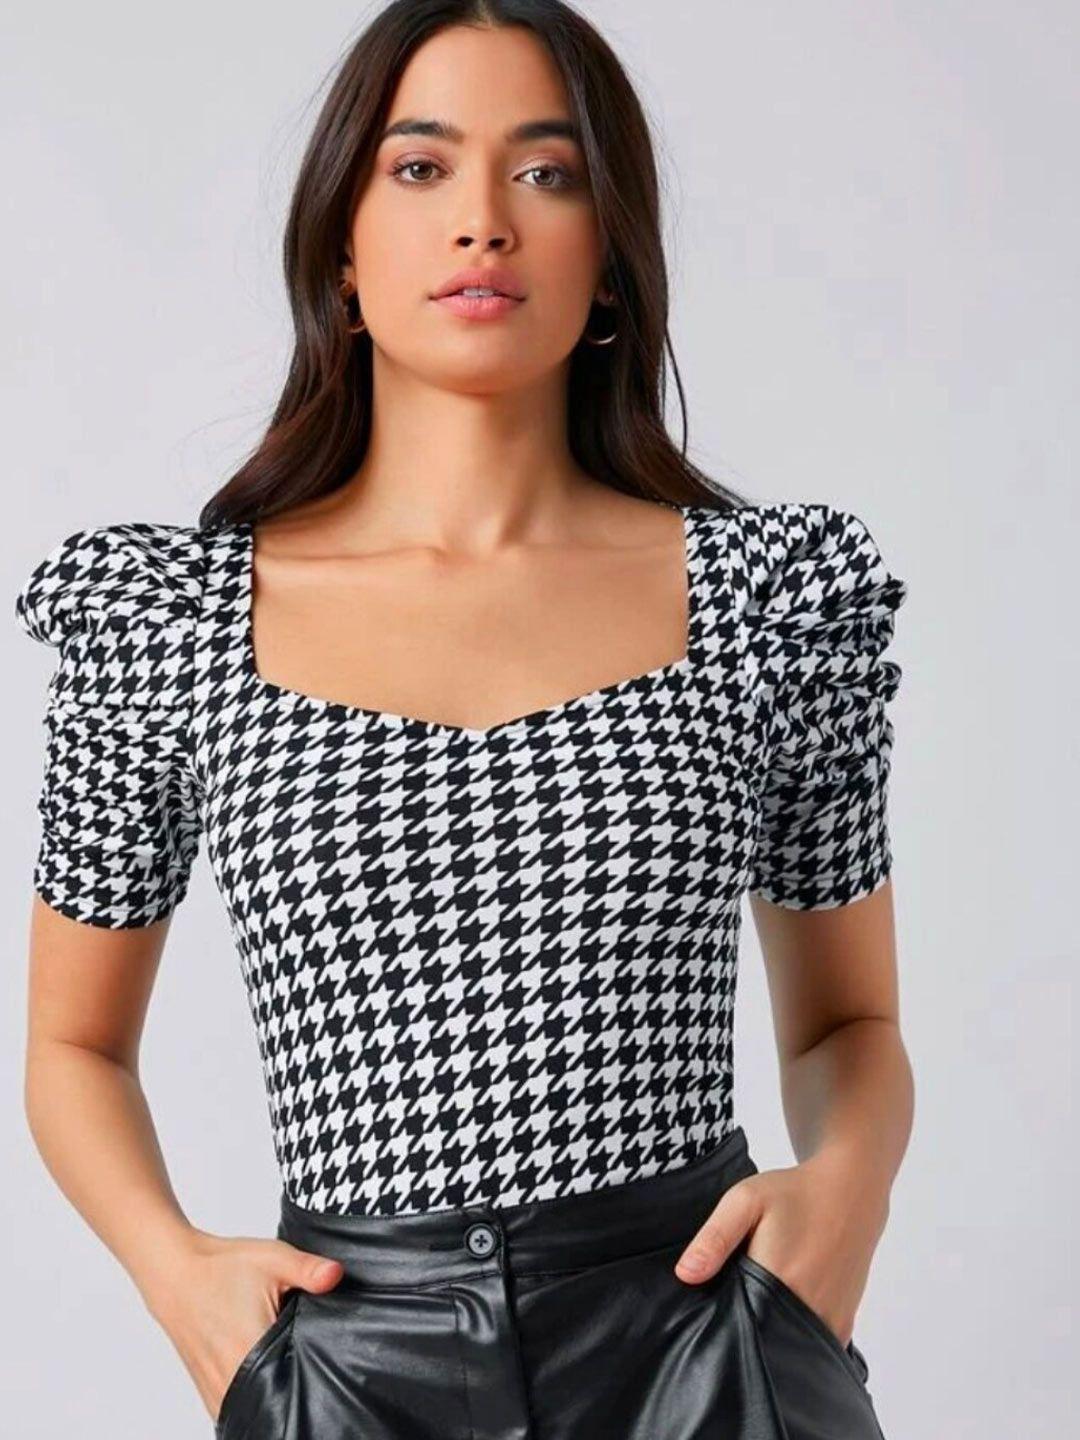 Dream Beauty Fashion Women Black Geometric Print Puff Sleeves Top